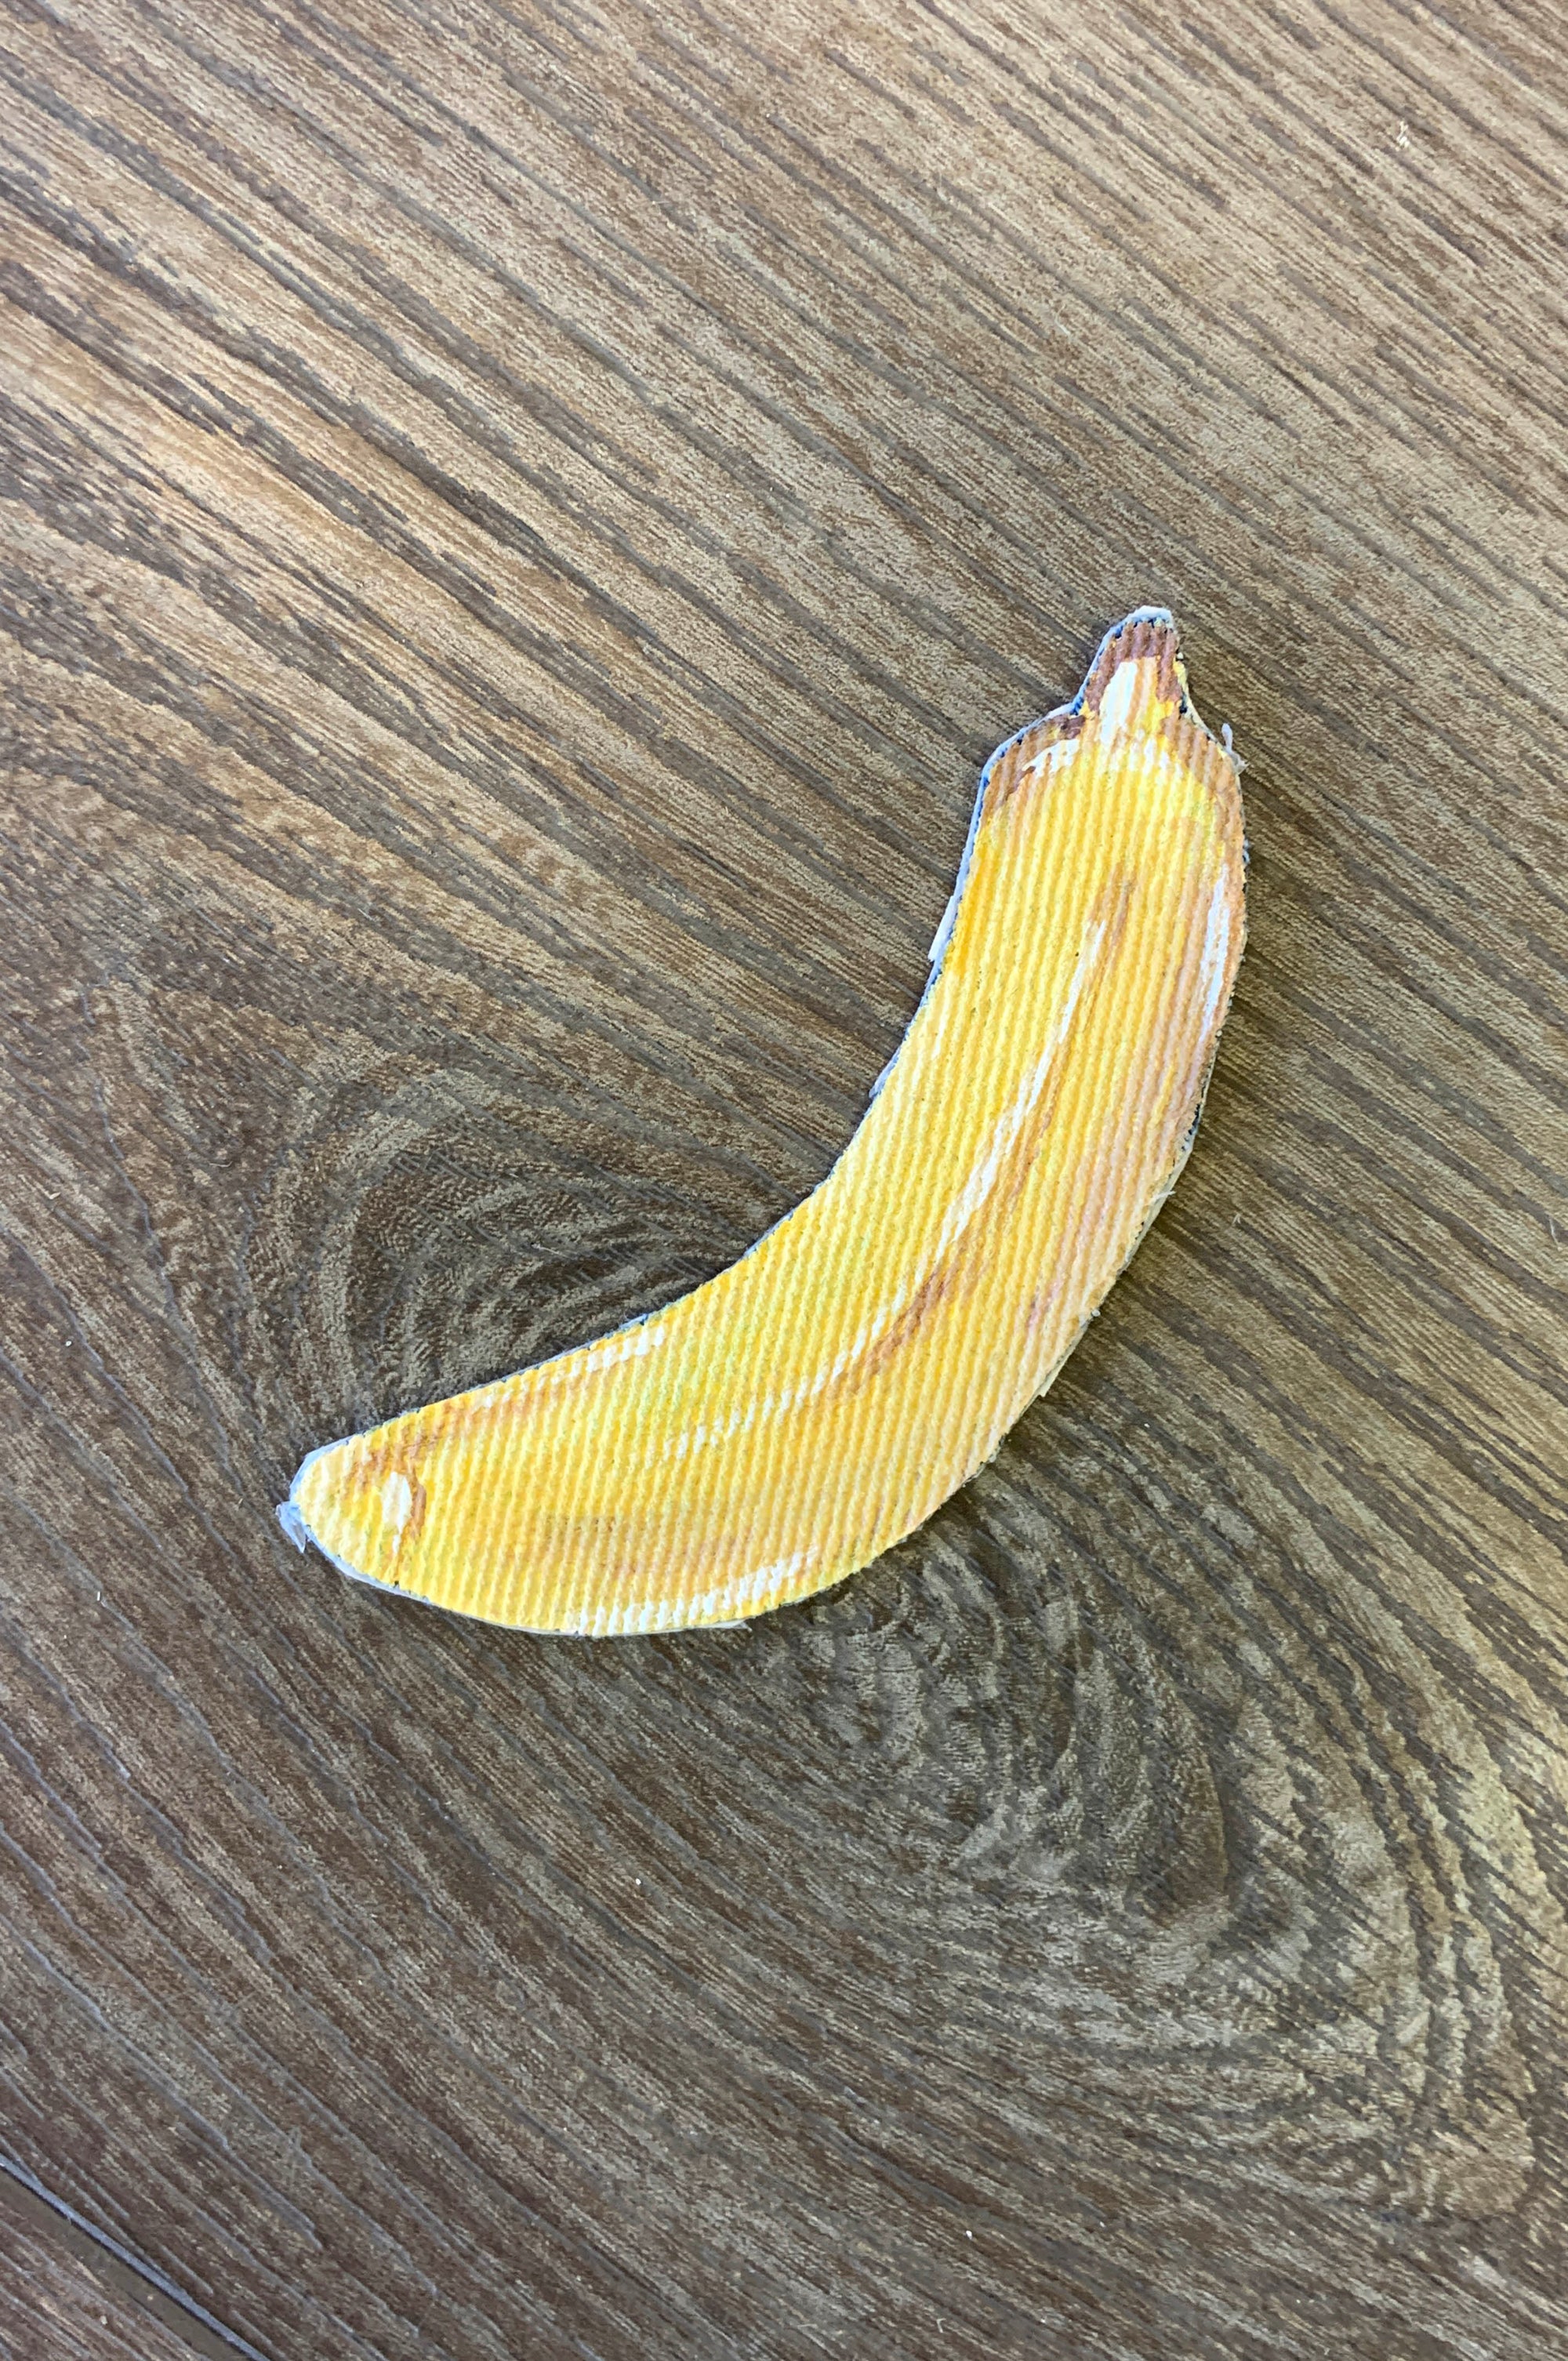 Rotten Banana Patch